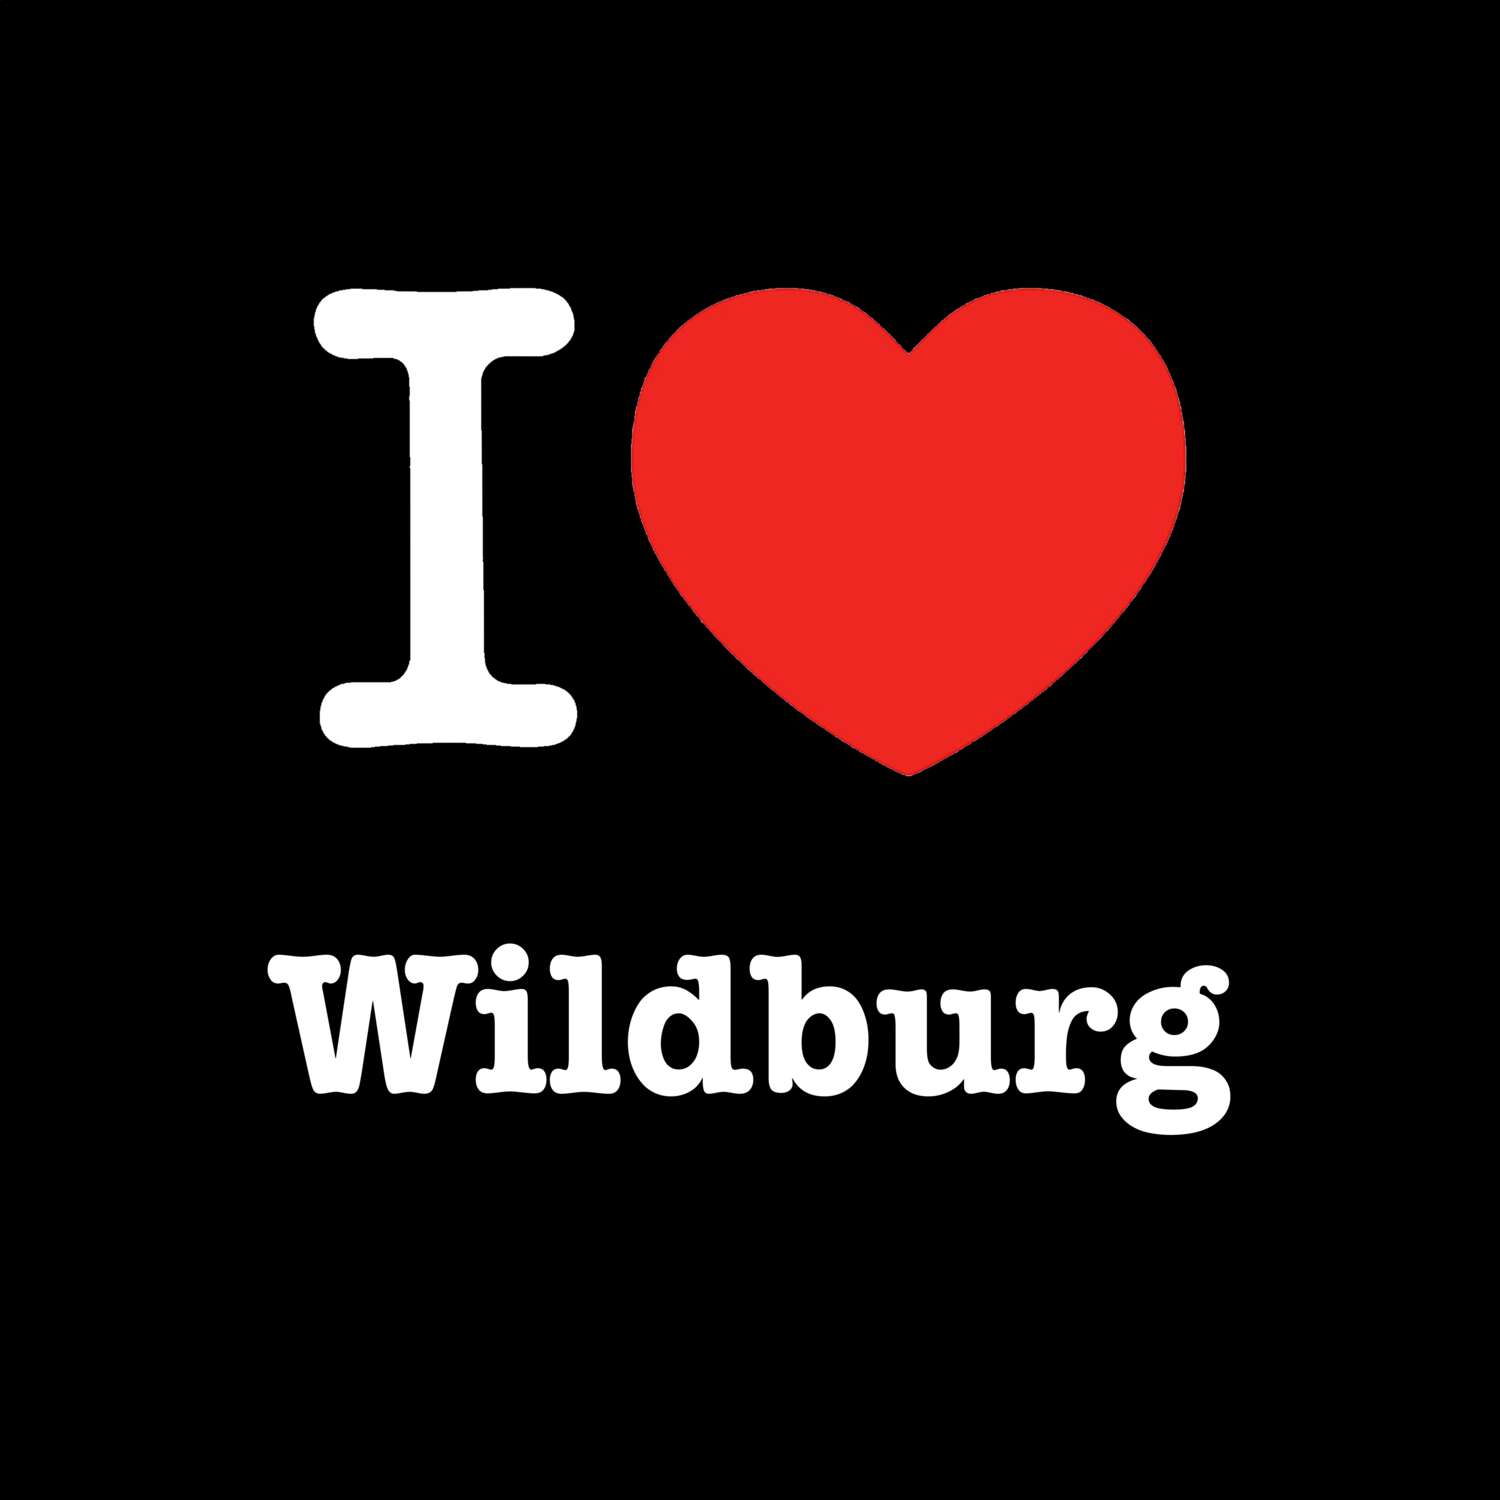 Wildburg T-Shirt »I love«